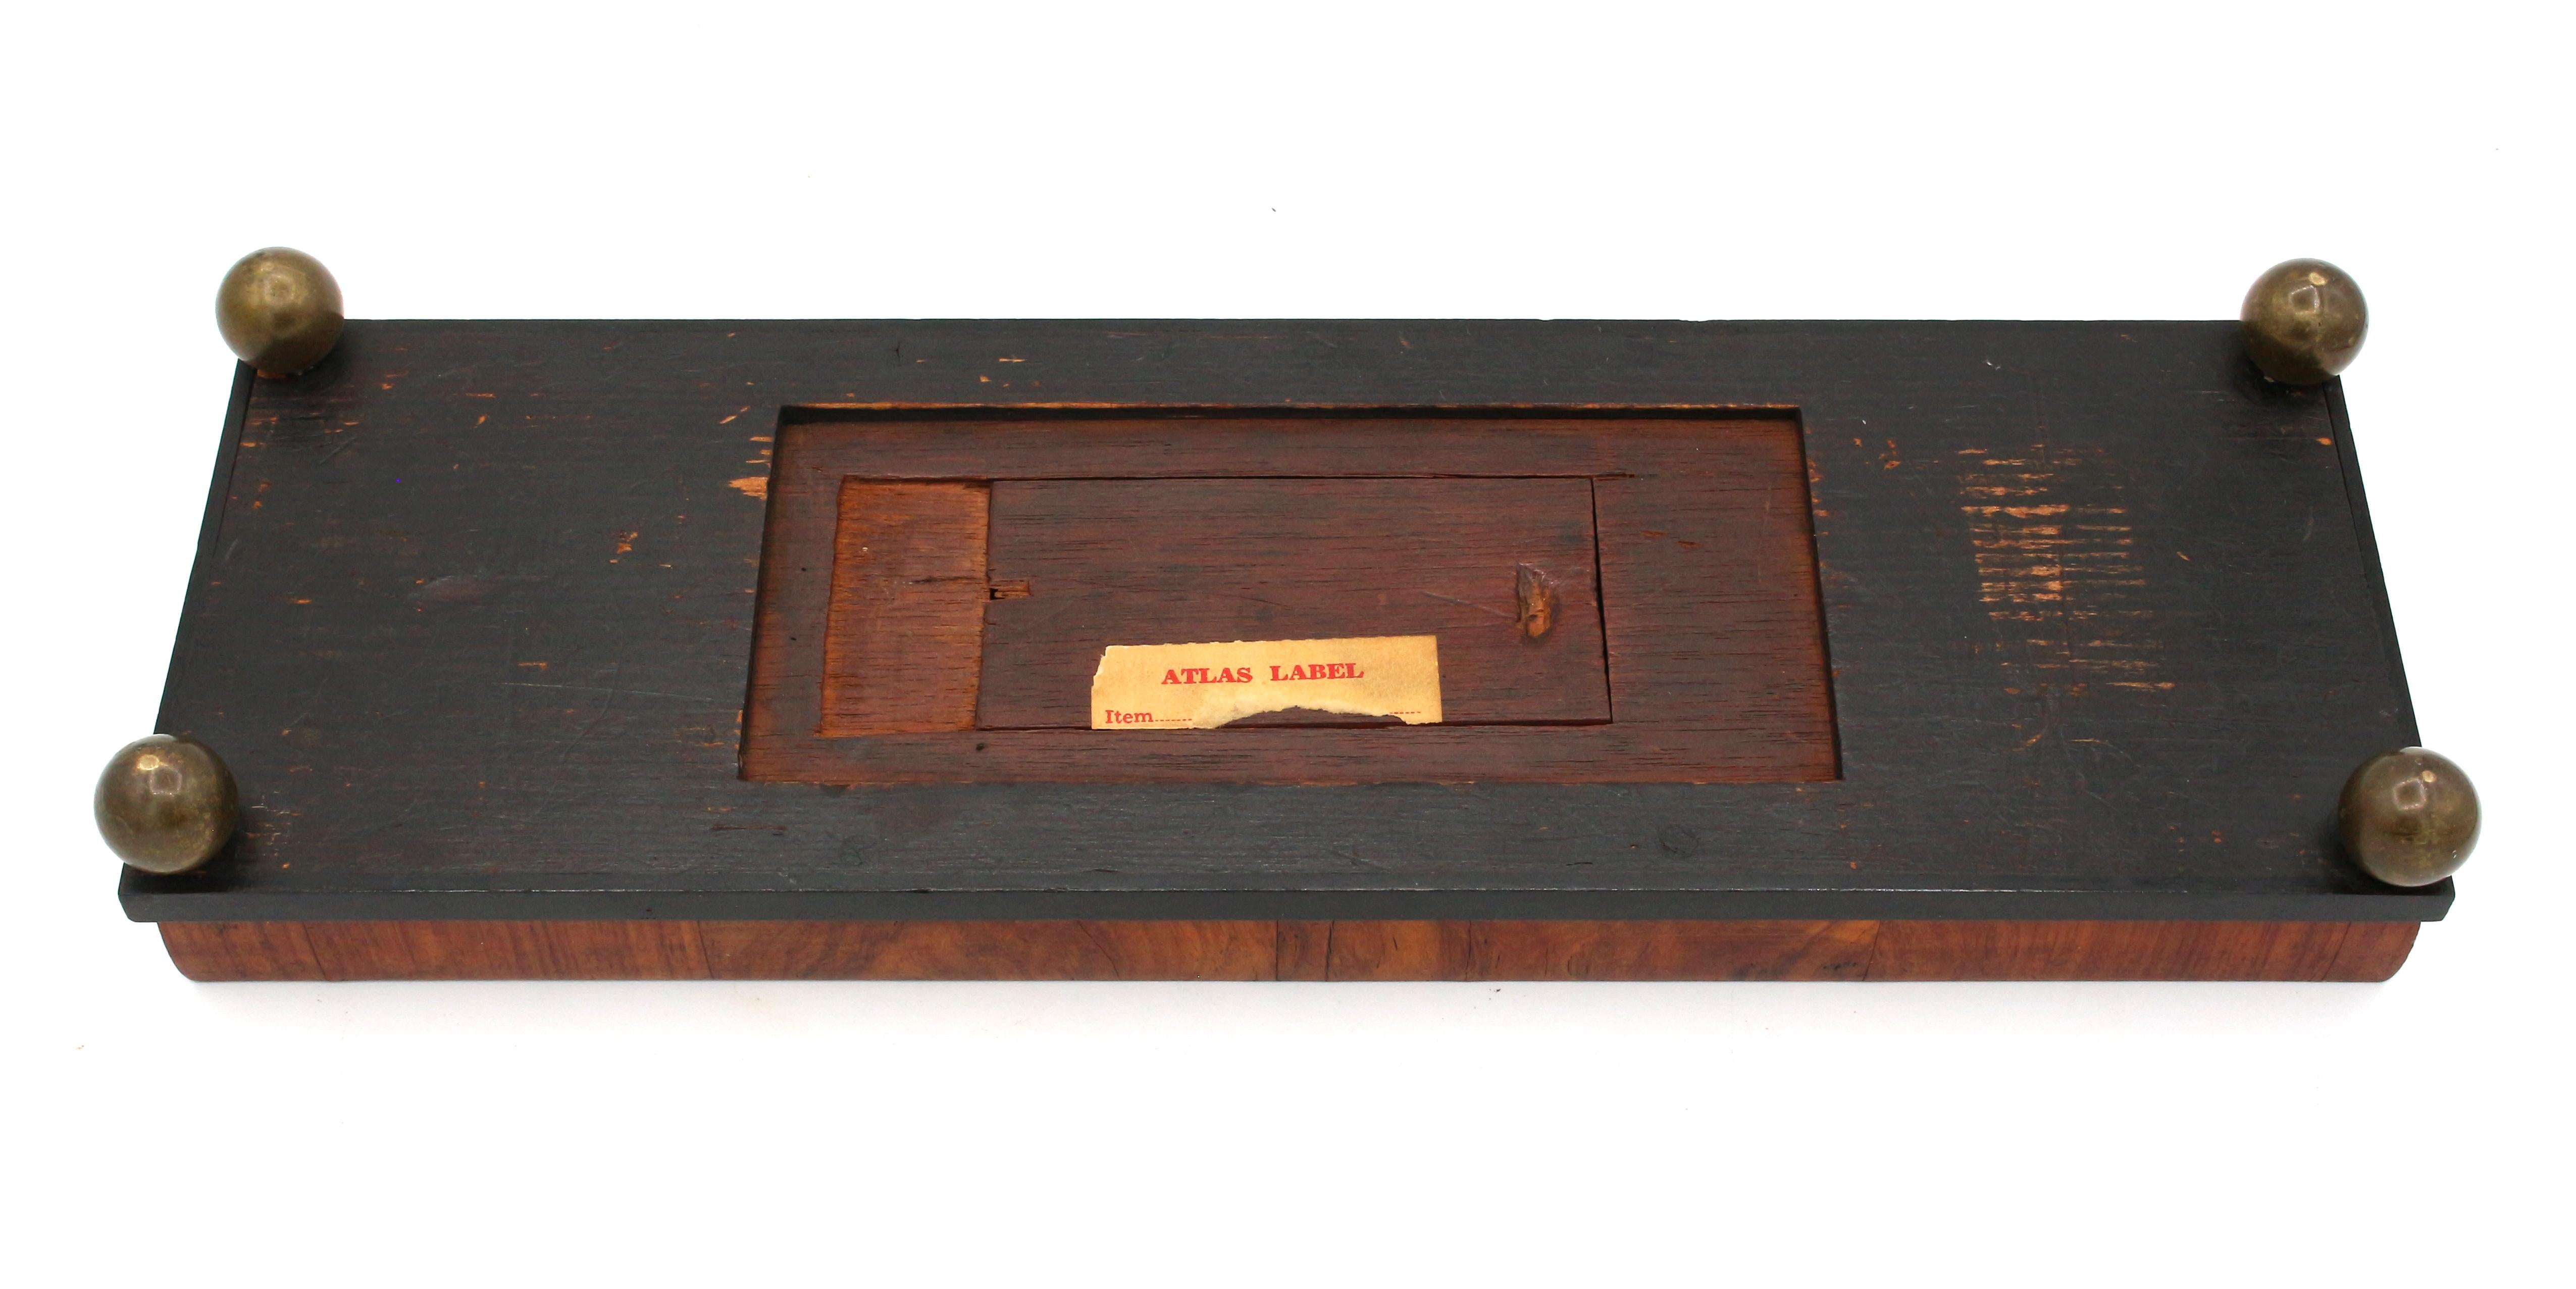 Milieu du XIXe siècle Circa 1860-80 Marqueterie anglaise incrustée Cribbage Board